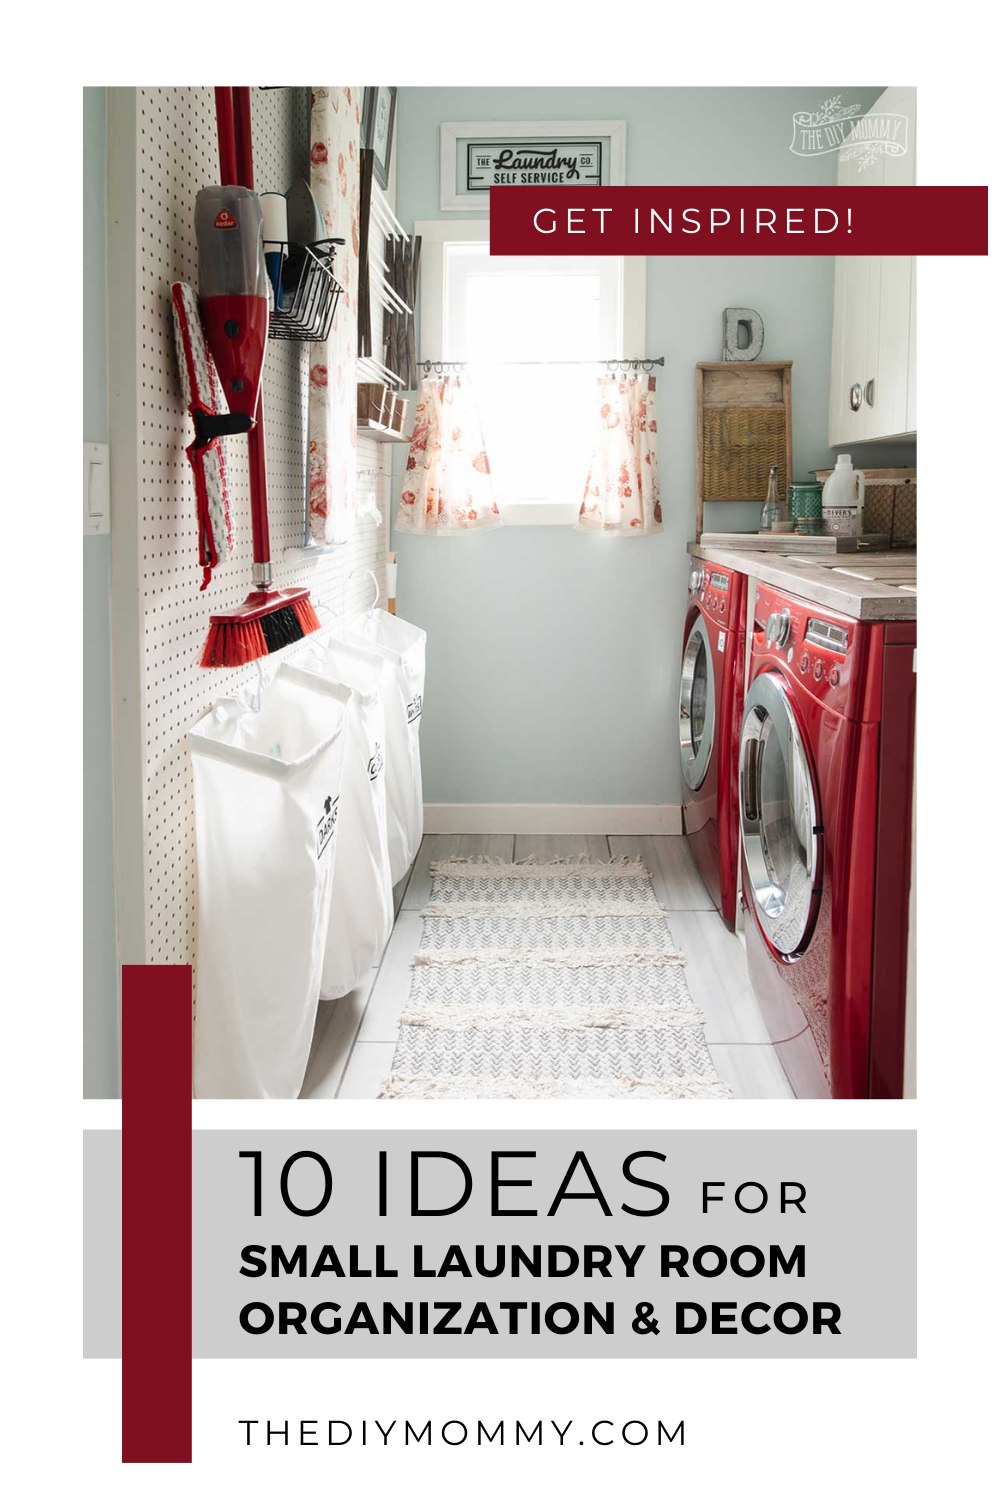 Laundry room ideas for organization